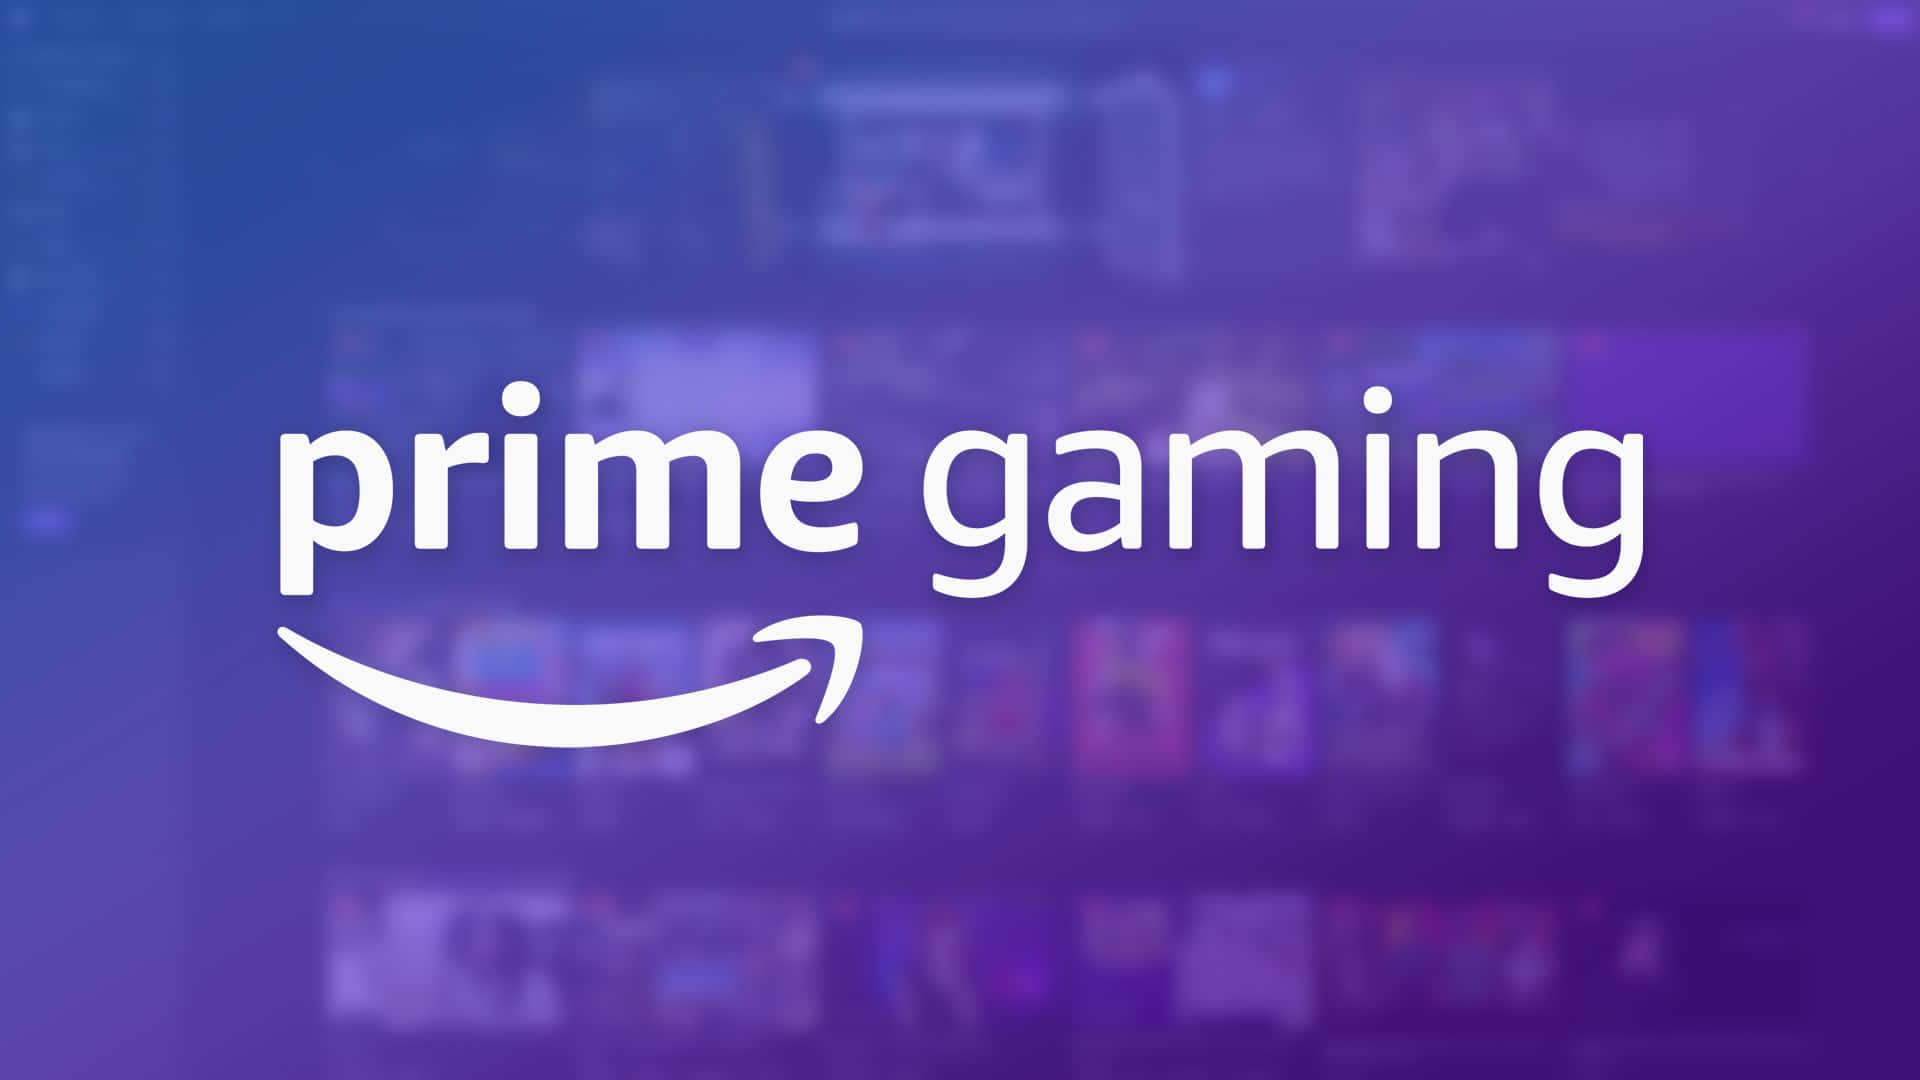 prime games 向其订户分发 25 款免费游戏！